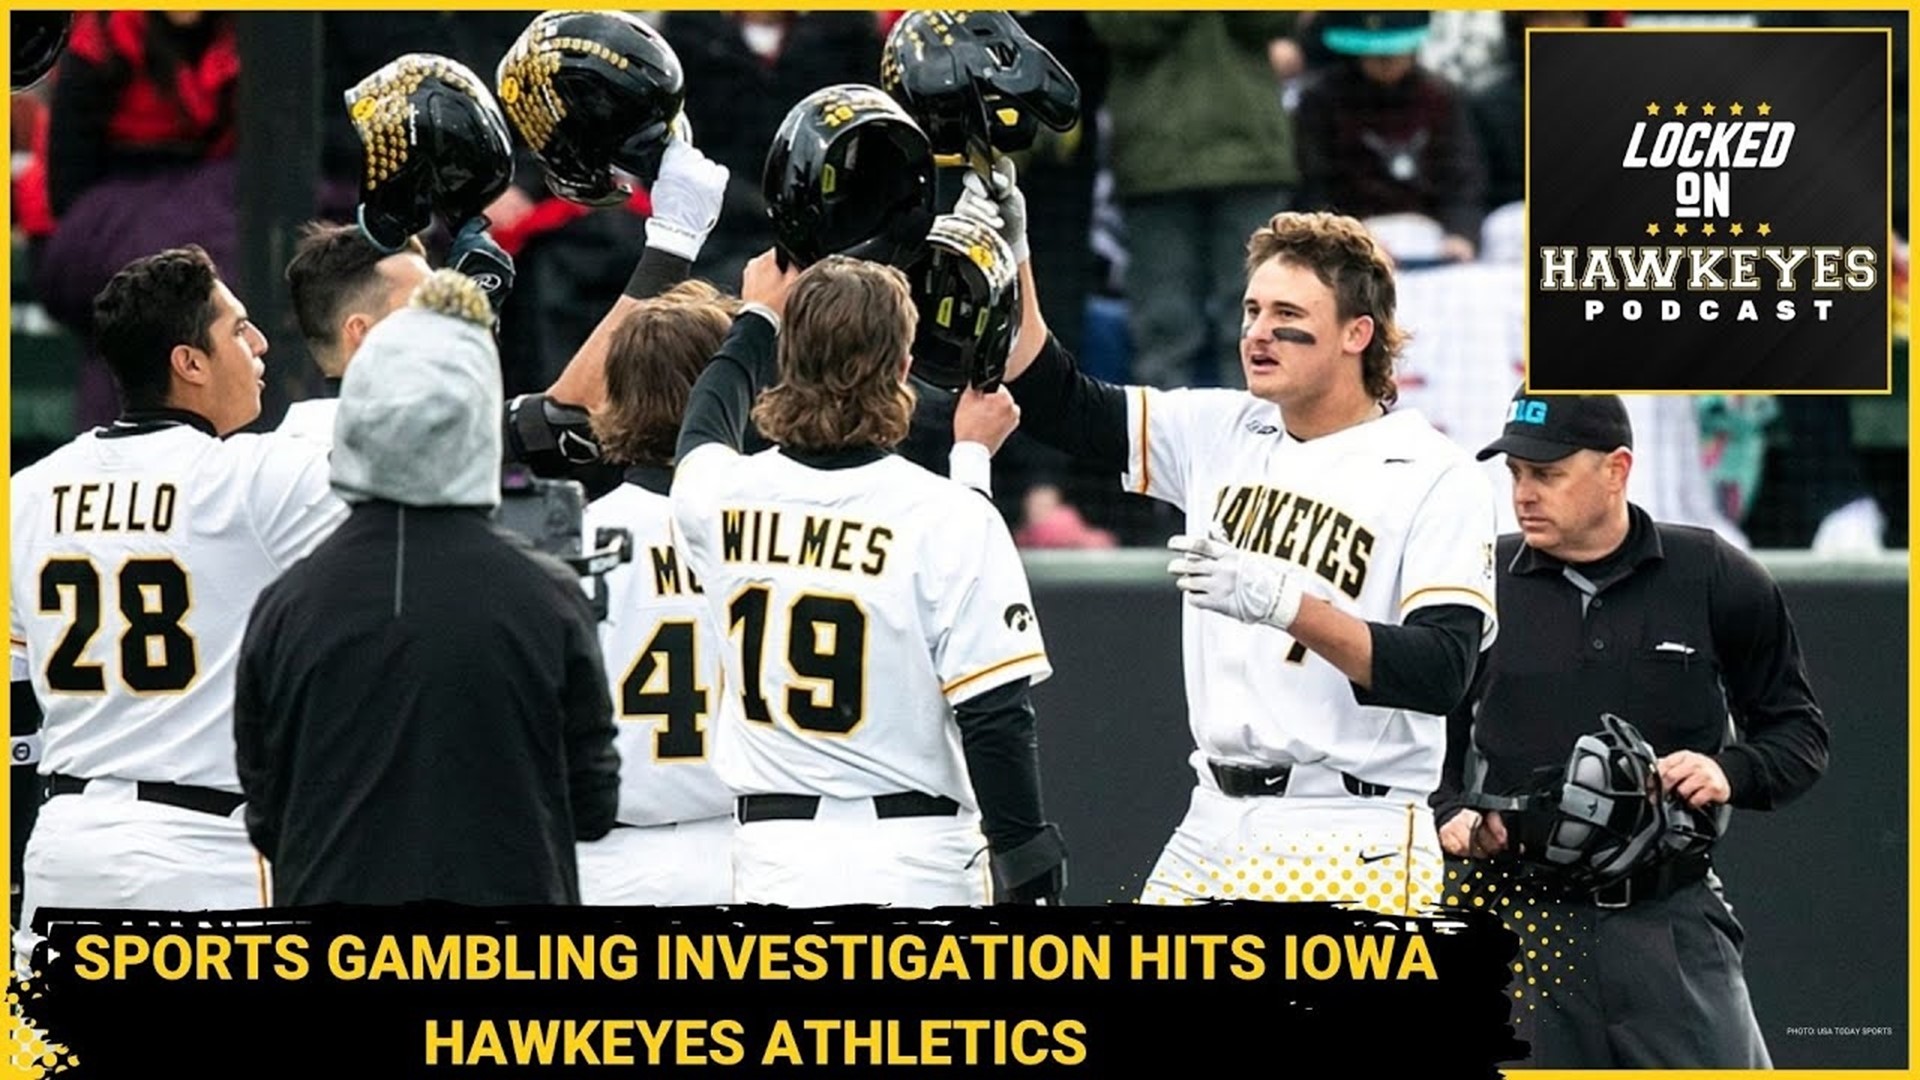 University of Iowa Sports Gambling Investigation